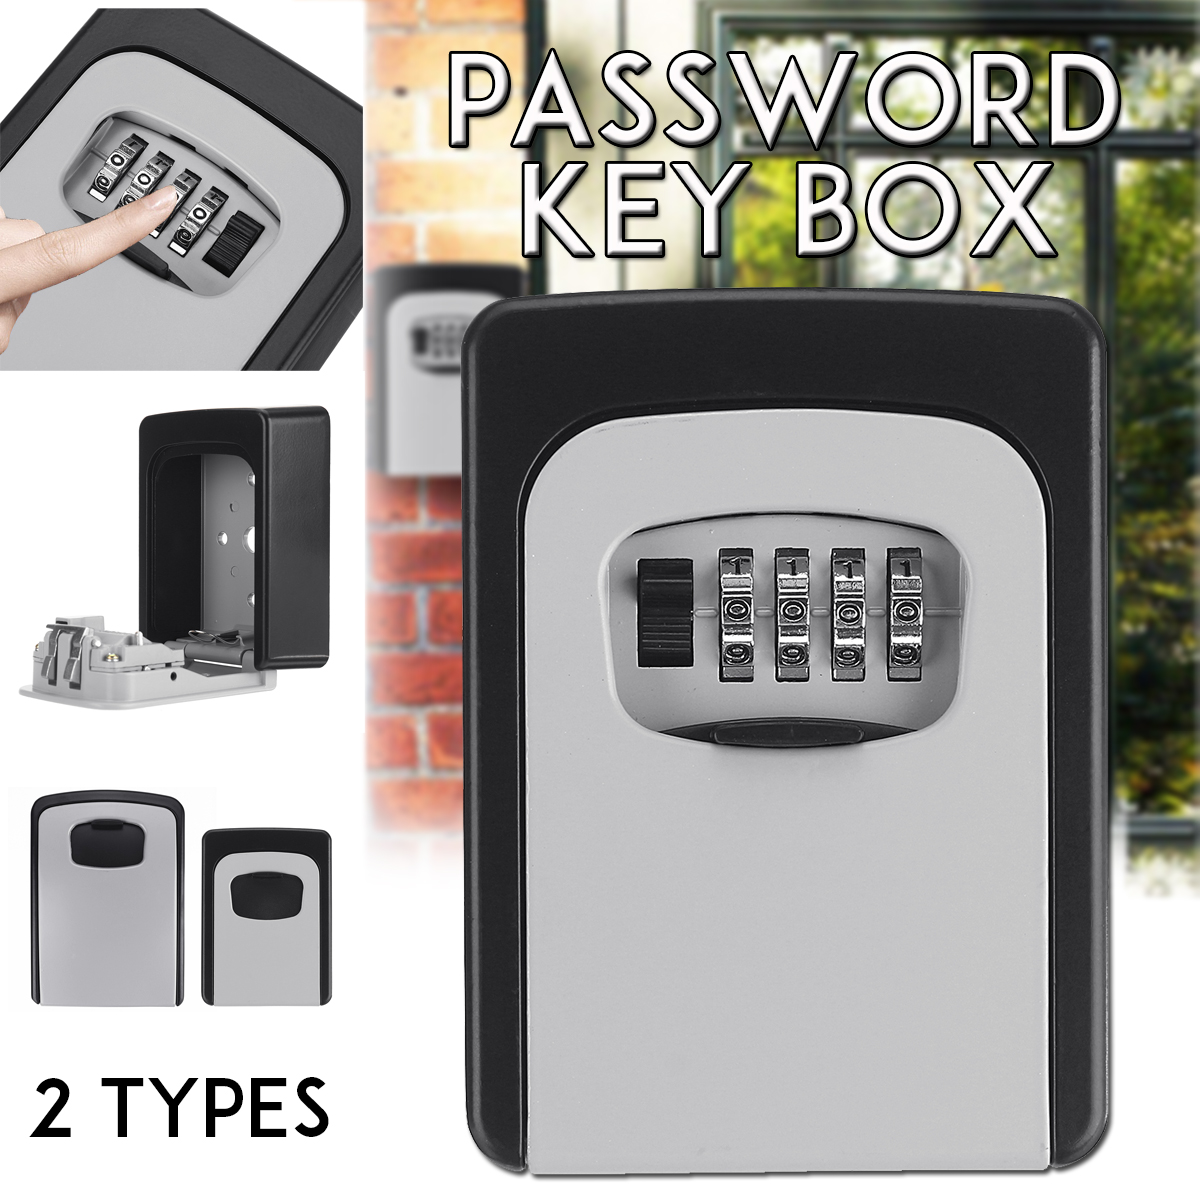 Outdoor-Wall-Mounted-Key-Safe-Combination-Lock-Storage-Box-4-Digital-Password-1693477-1